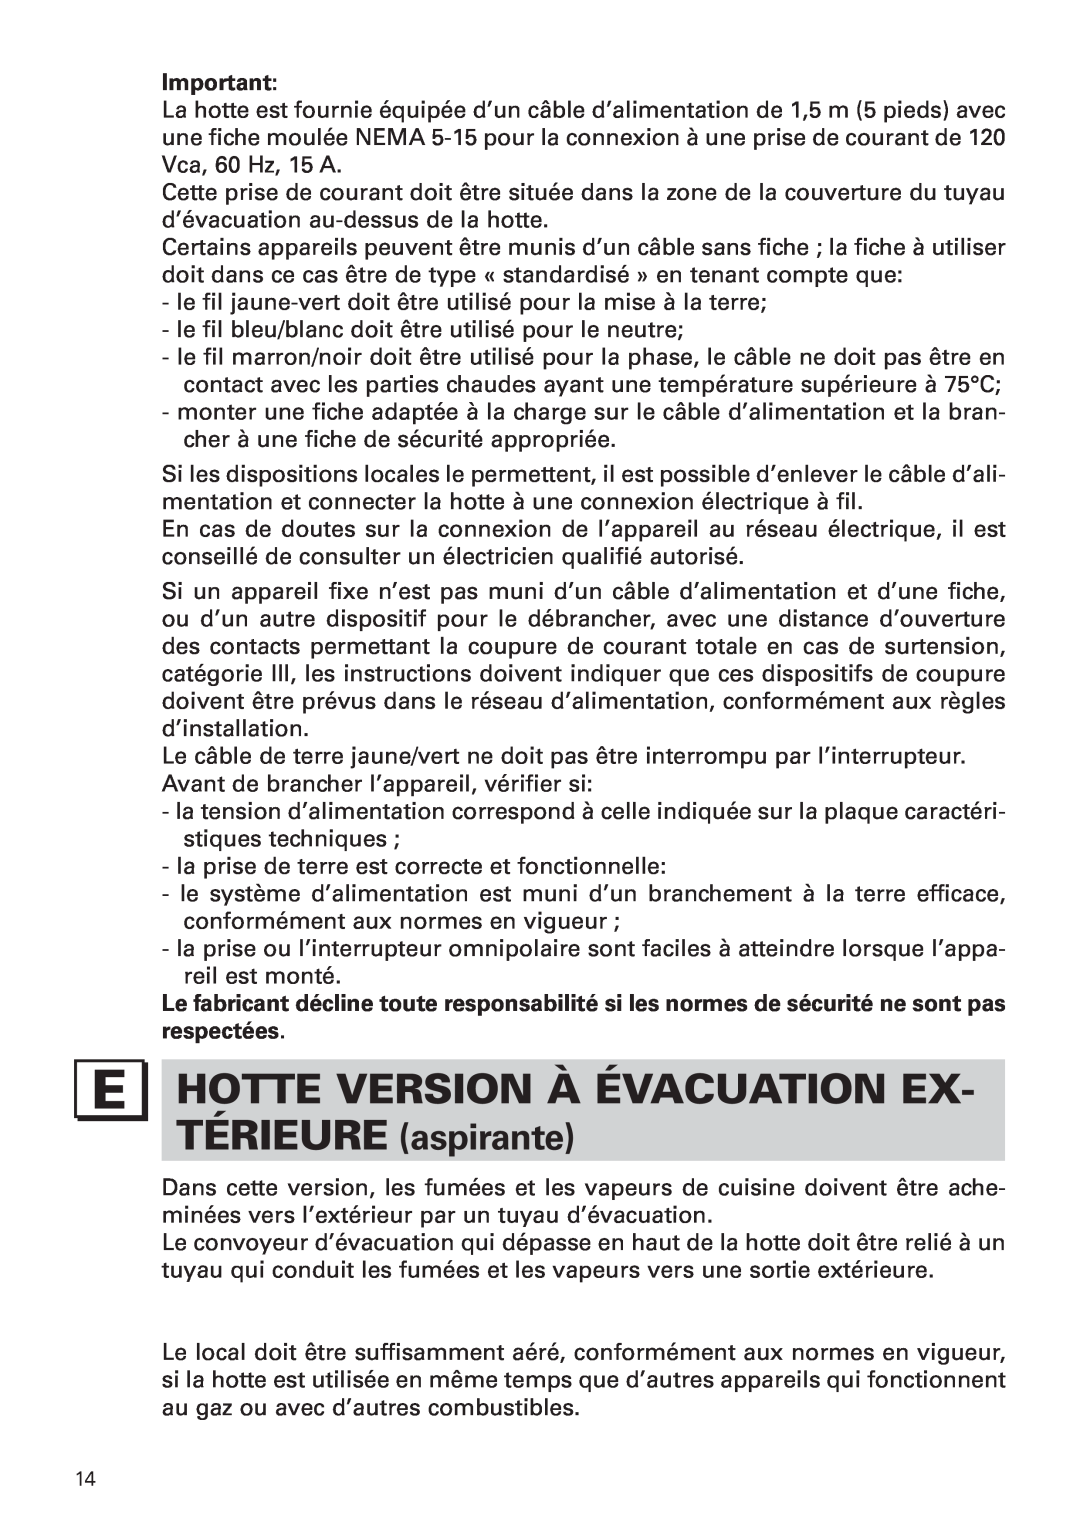 Bertazzoni KIN 36 PRO X manual Hotte Version À Évacuation Ex, TÉRIEURE aspirante 